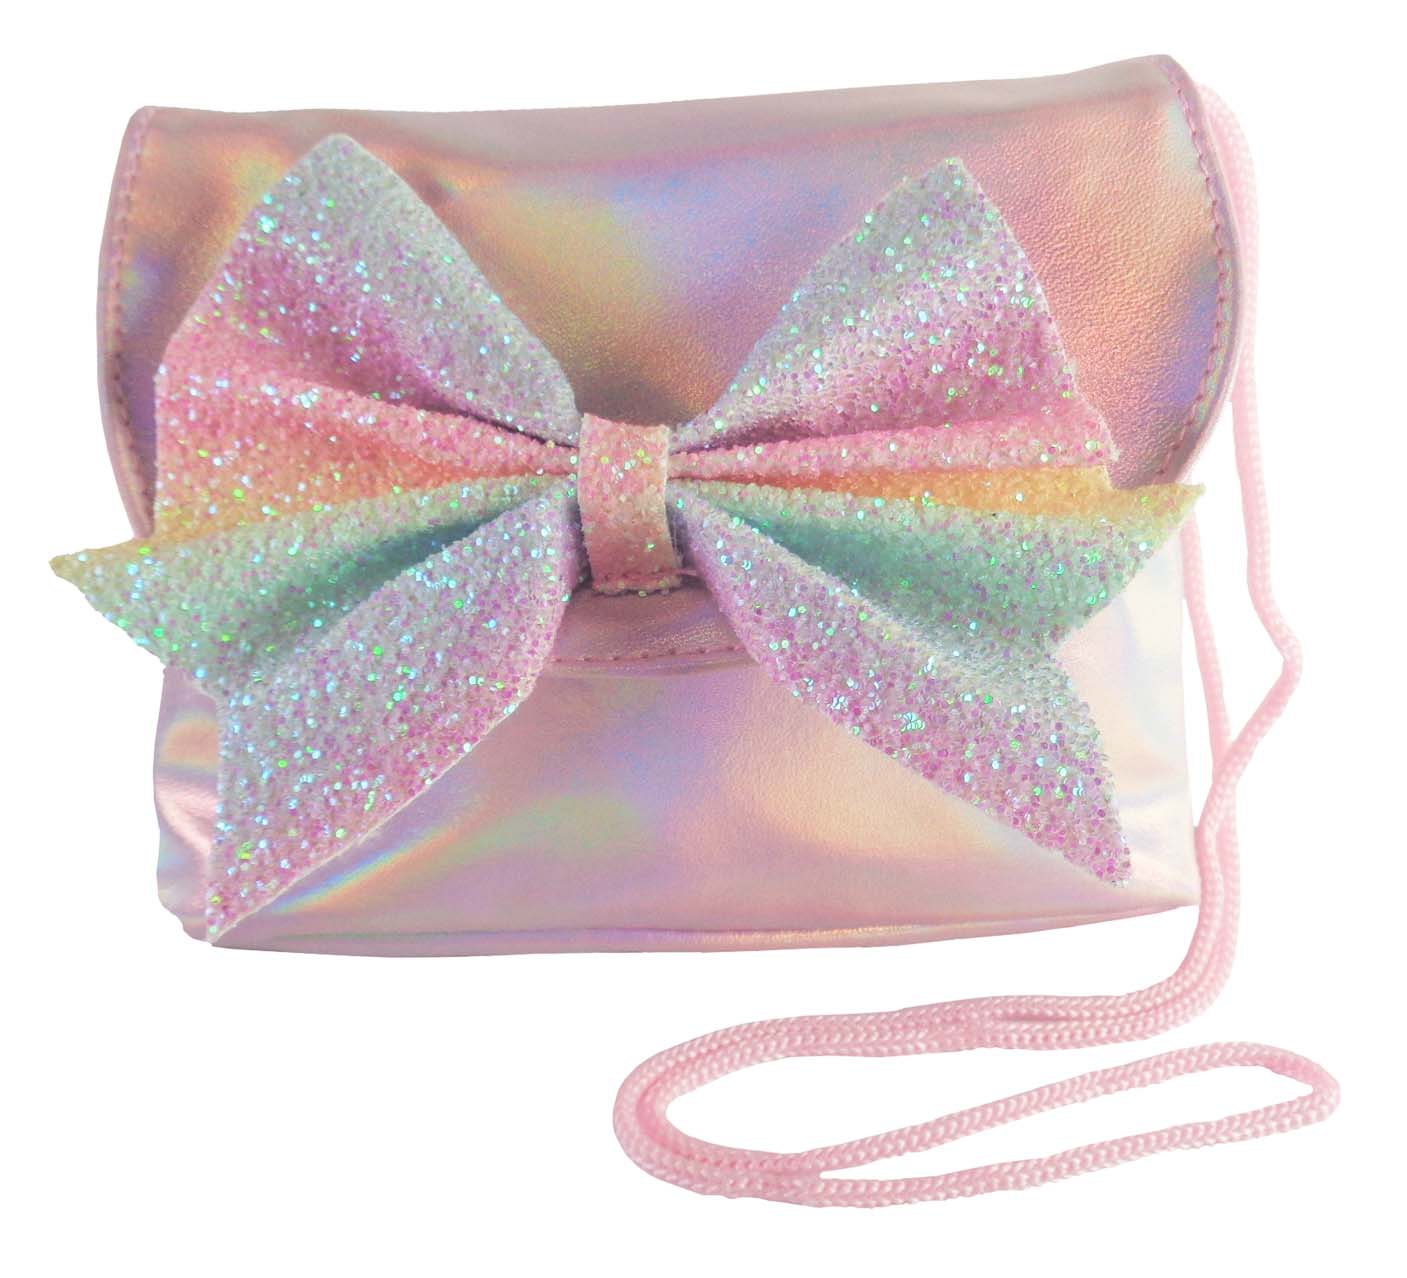 Childrens pink sparkly handbag-0